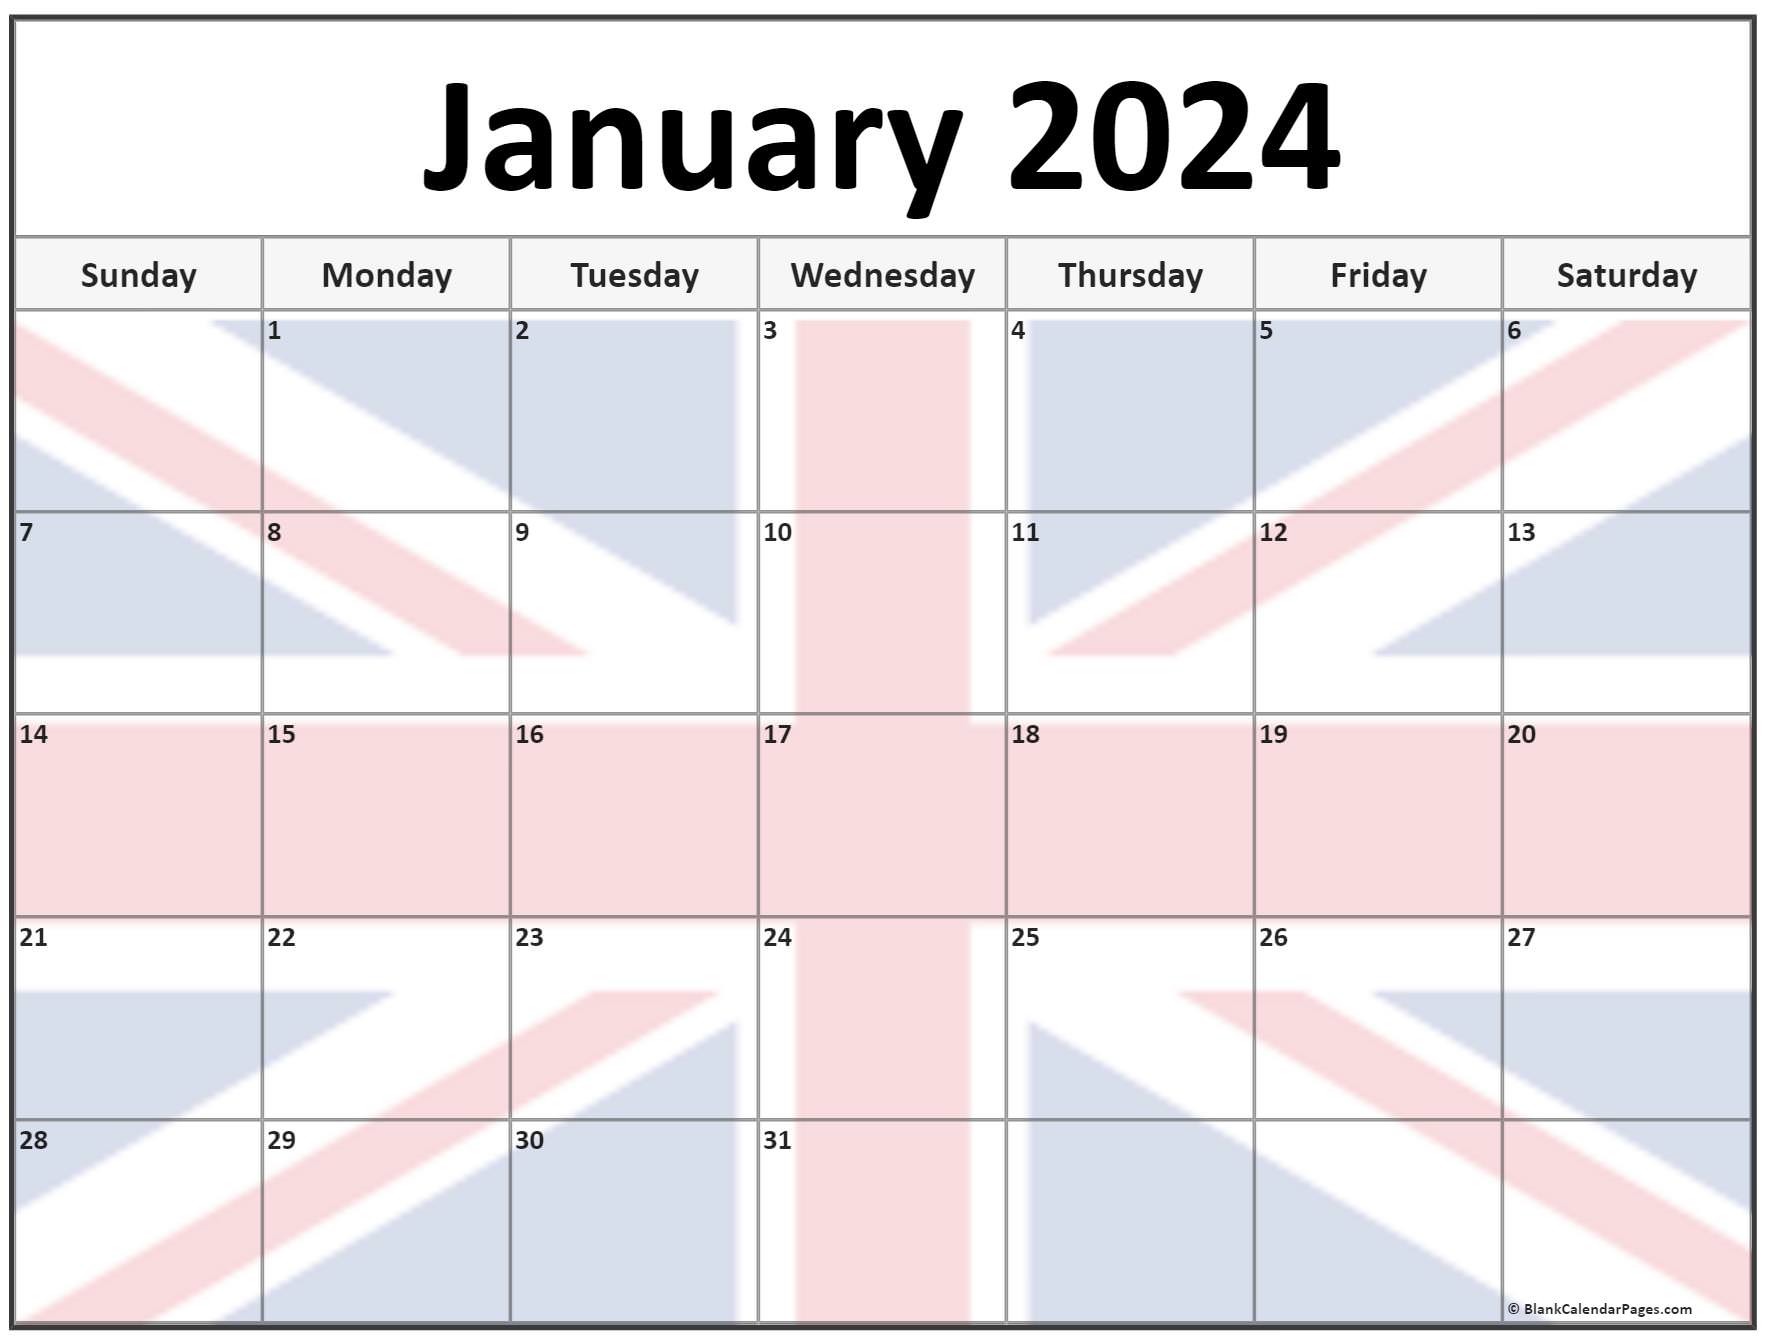 january-calendar-video-2024-new-ultimate-popular-incredible-moon-calendar-images-2024